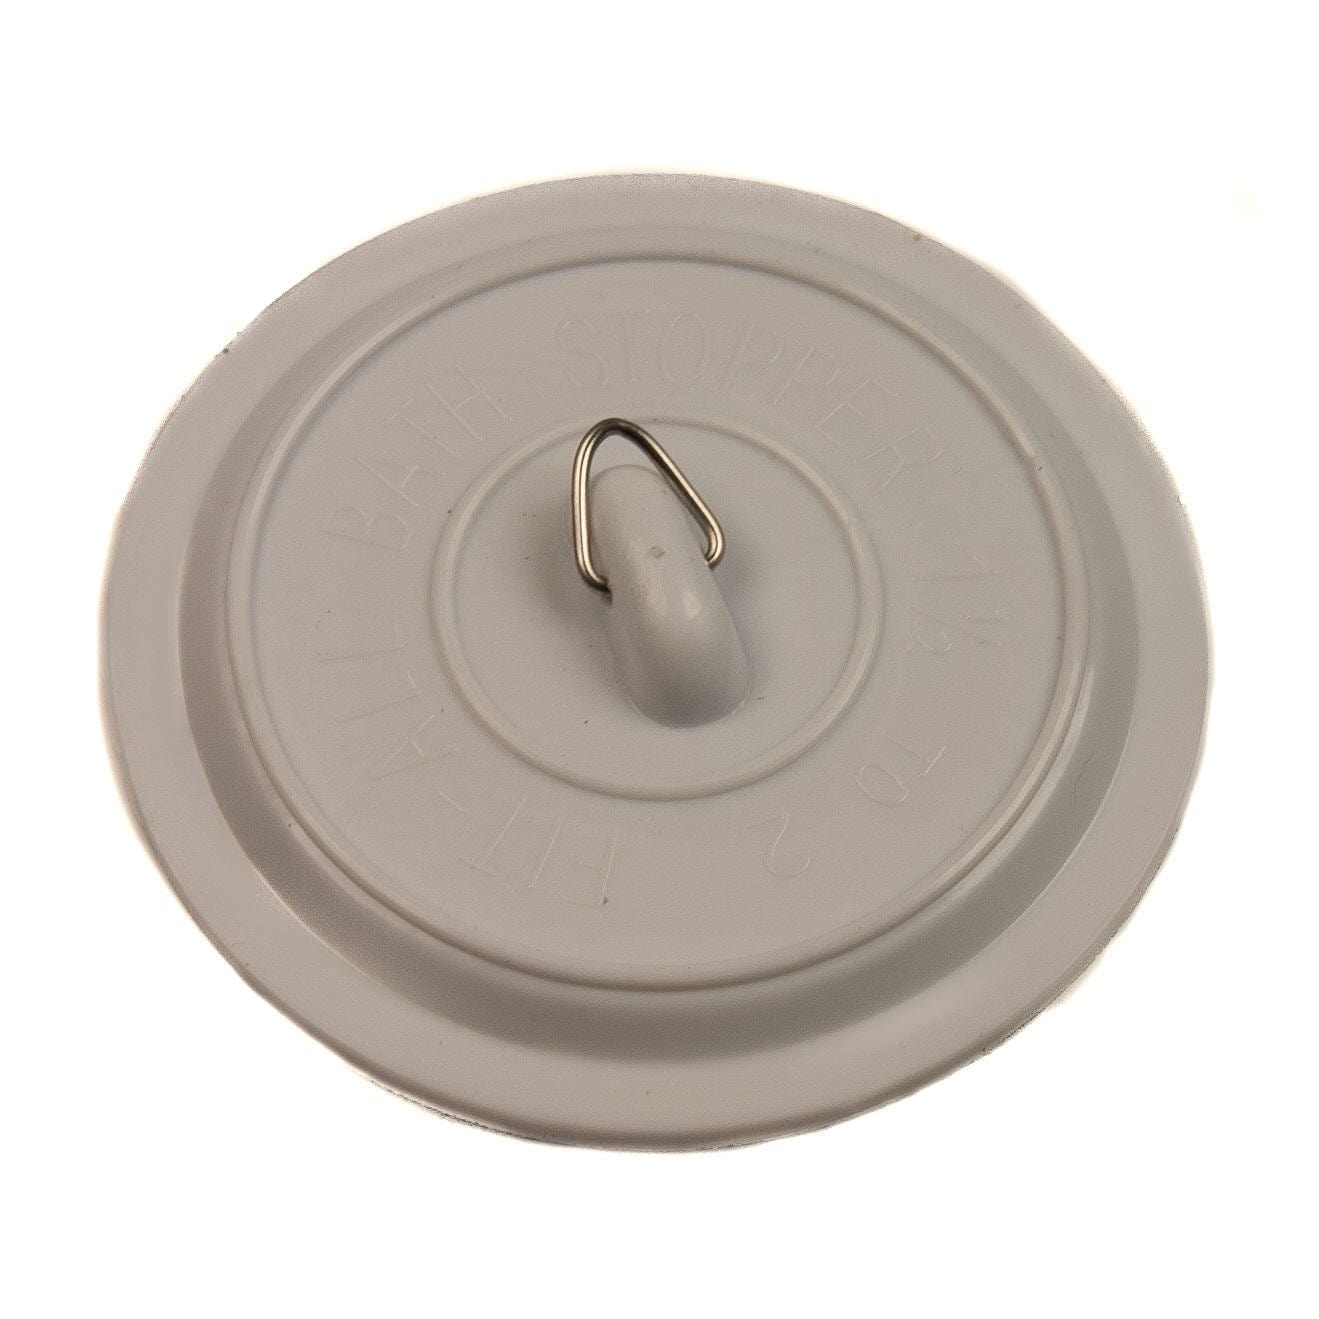 Sink Bath Plug Universal Rubber White 1 1/2" to 2" 37mm - 50mm Travel Plug Plugs & Strainers Thunderfix 100445